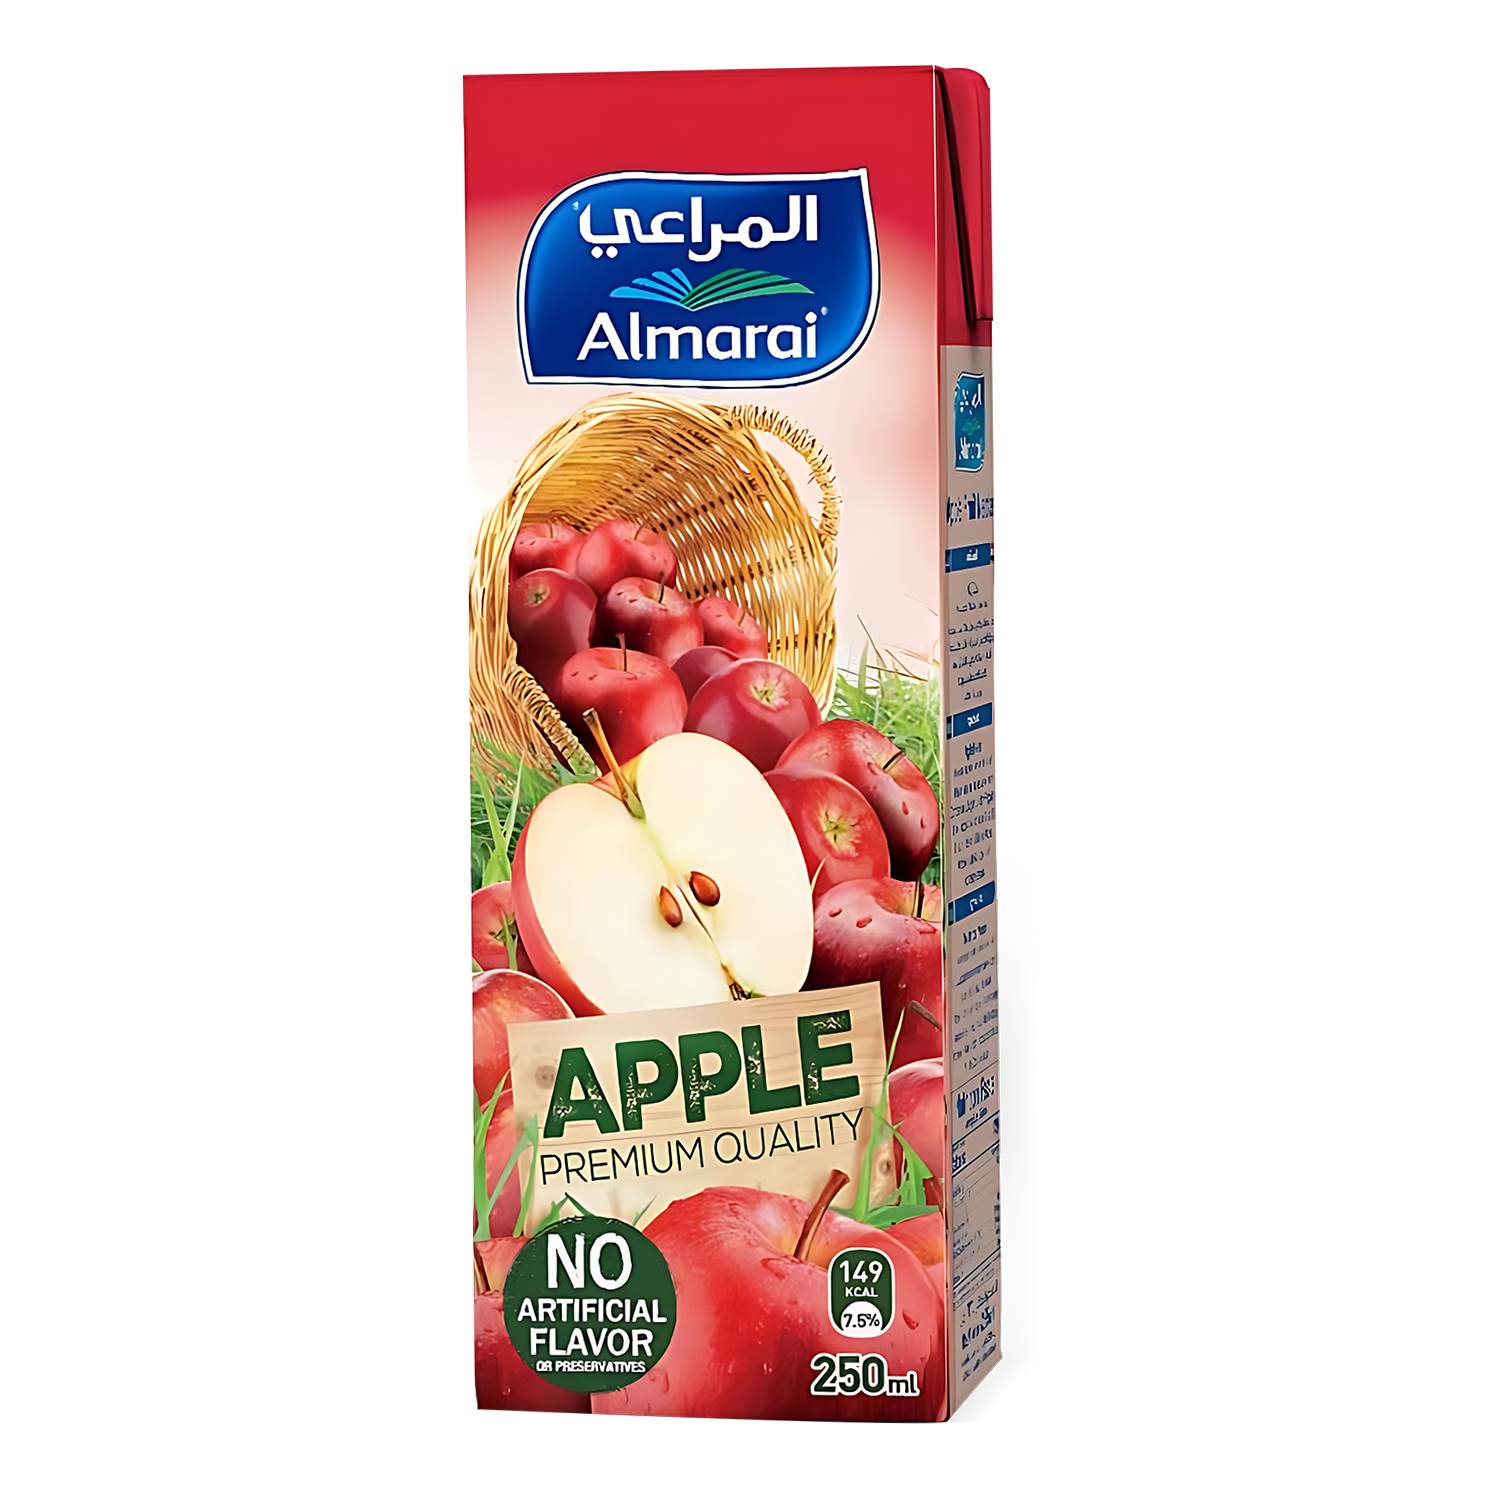 Red fruit alarai apple nectar juice l pack of packaging type tetra pack